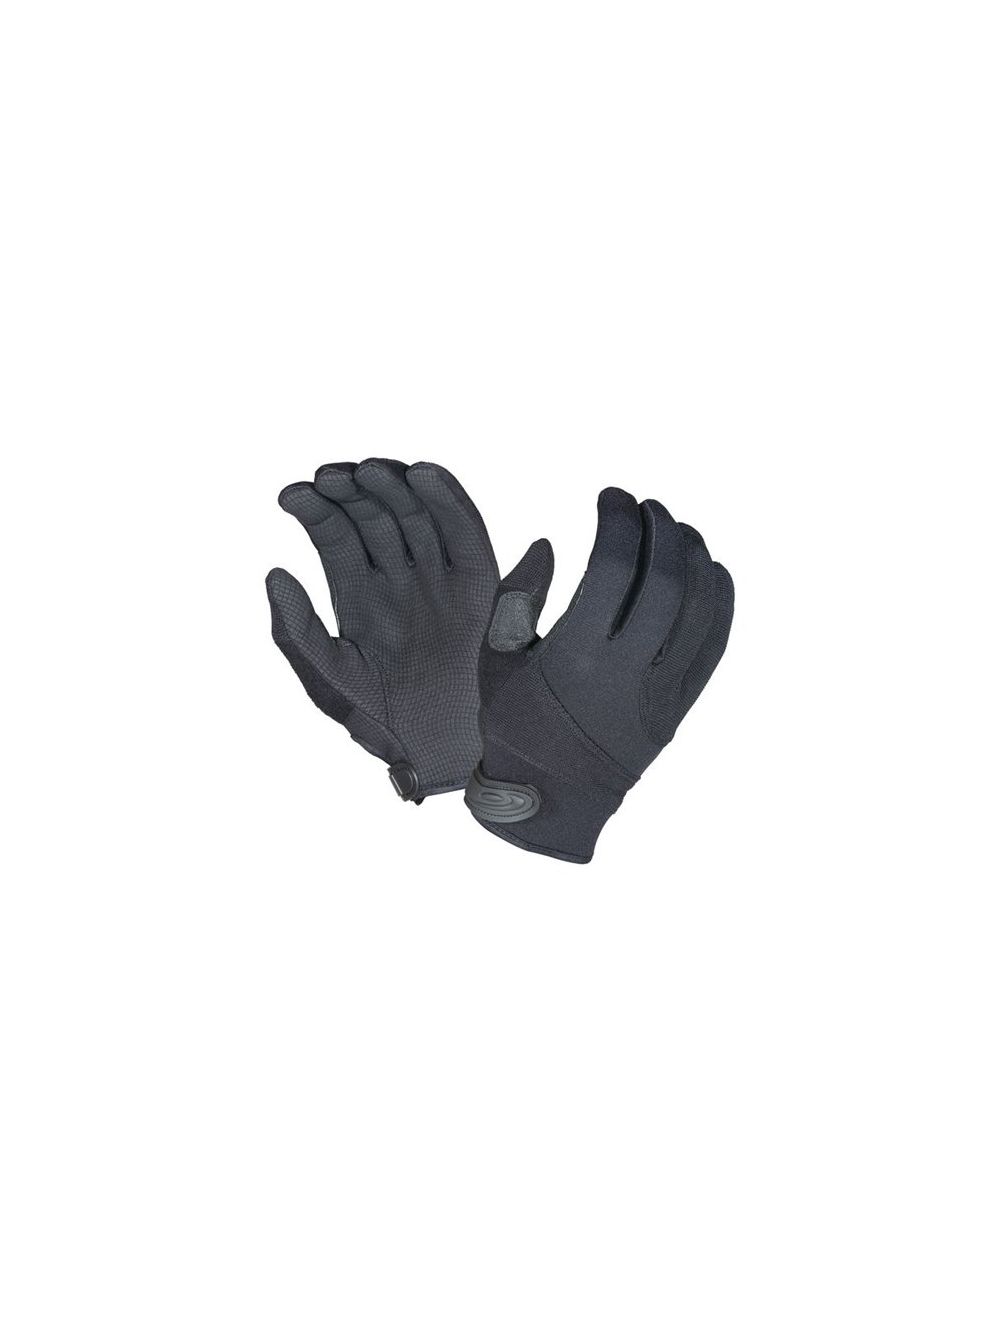 Street Guard Cut-Resistant Tactical Police Duty Glove w/ Kevlar